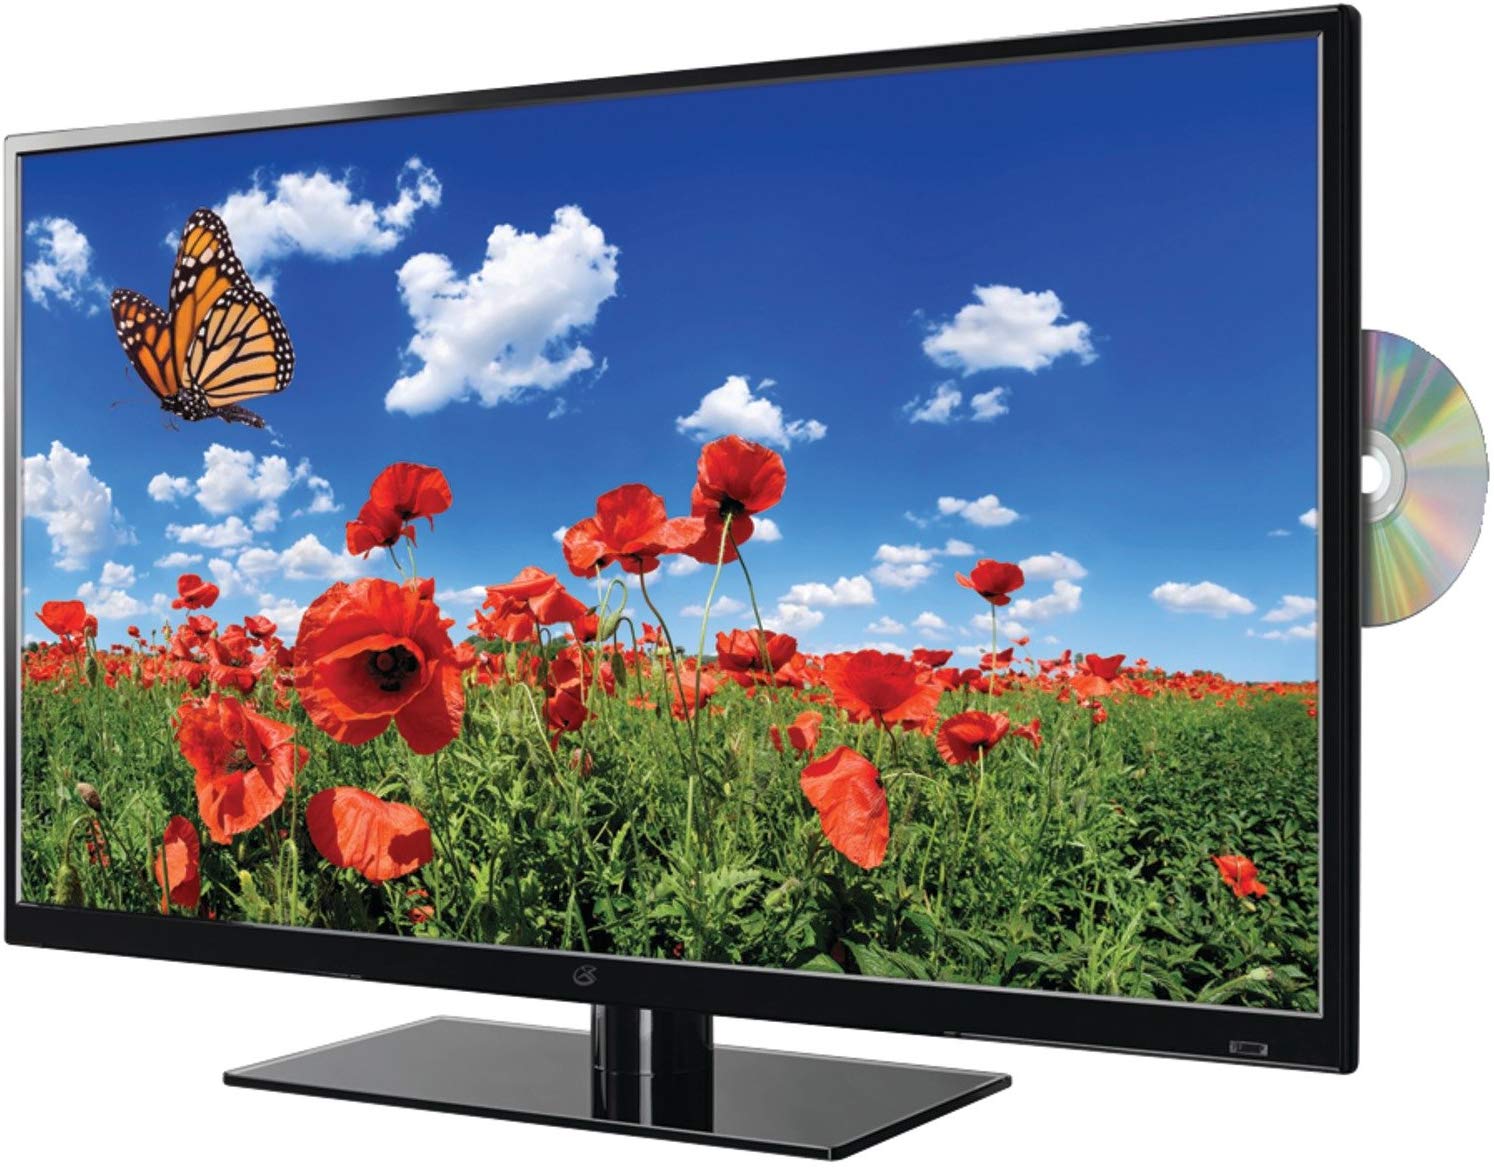 Gpx TDE3274BP 32' 1080p LED テレビと DVD の組み合わせ